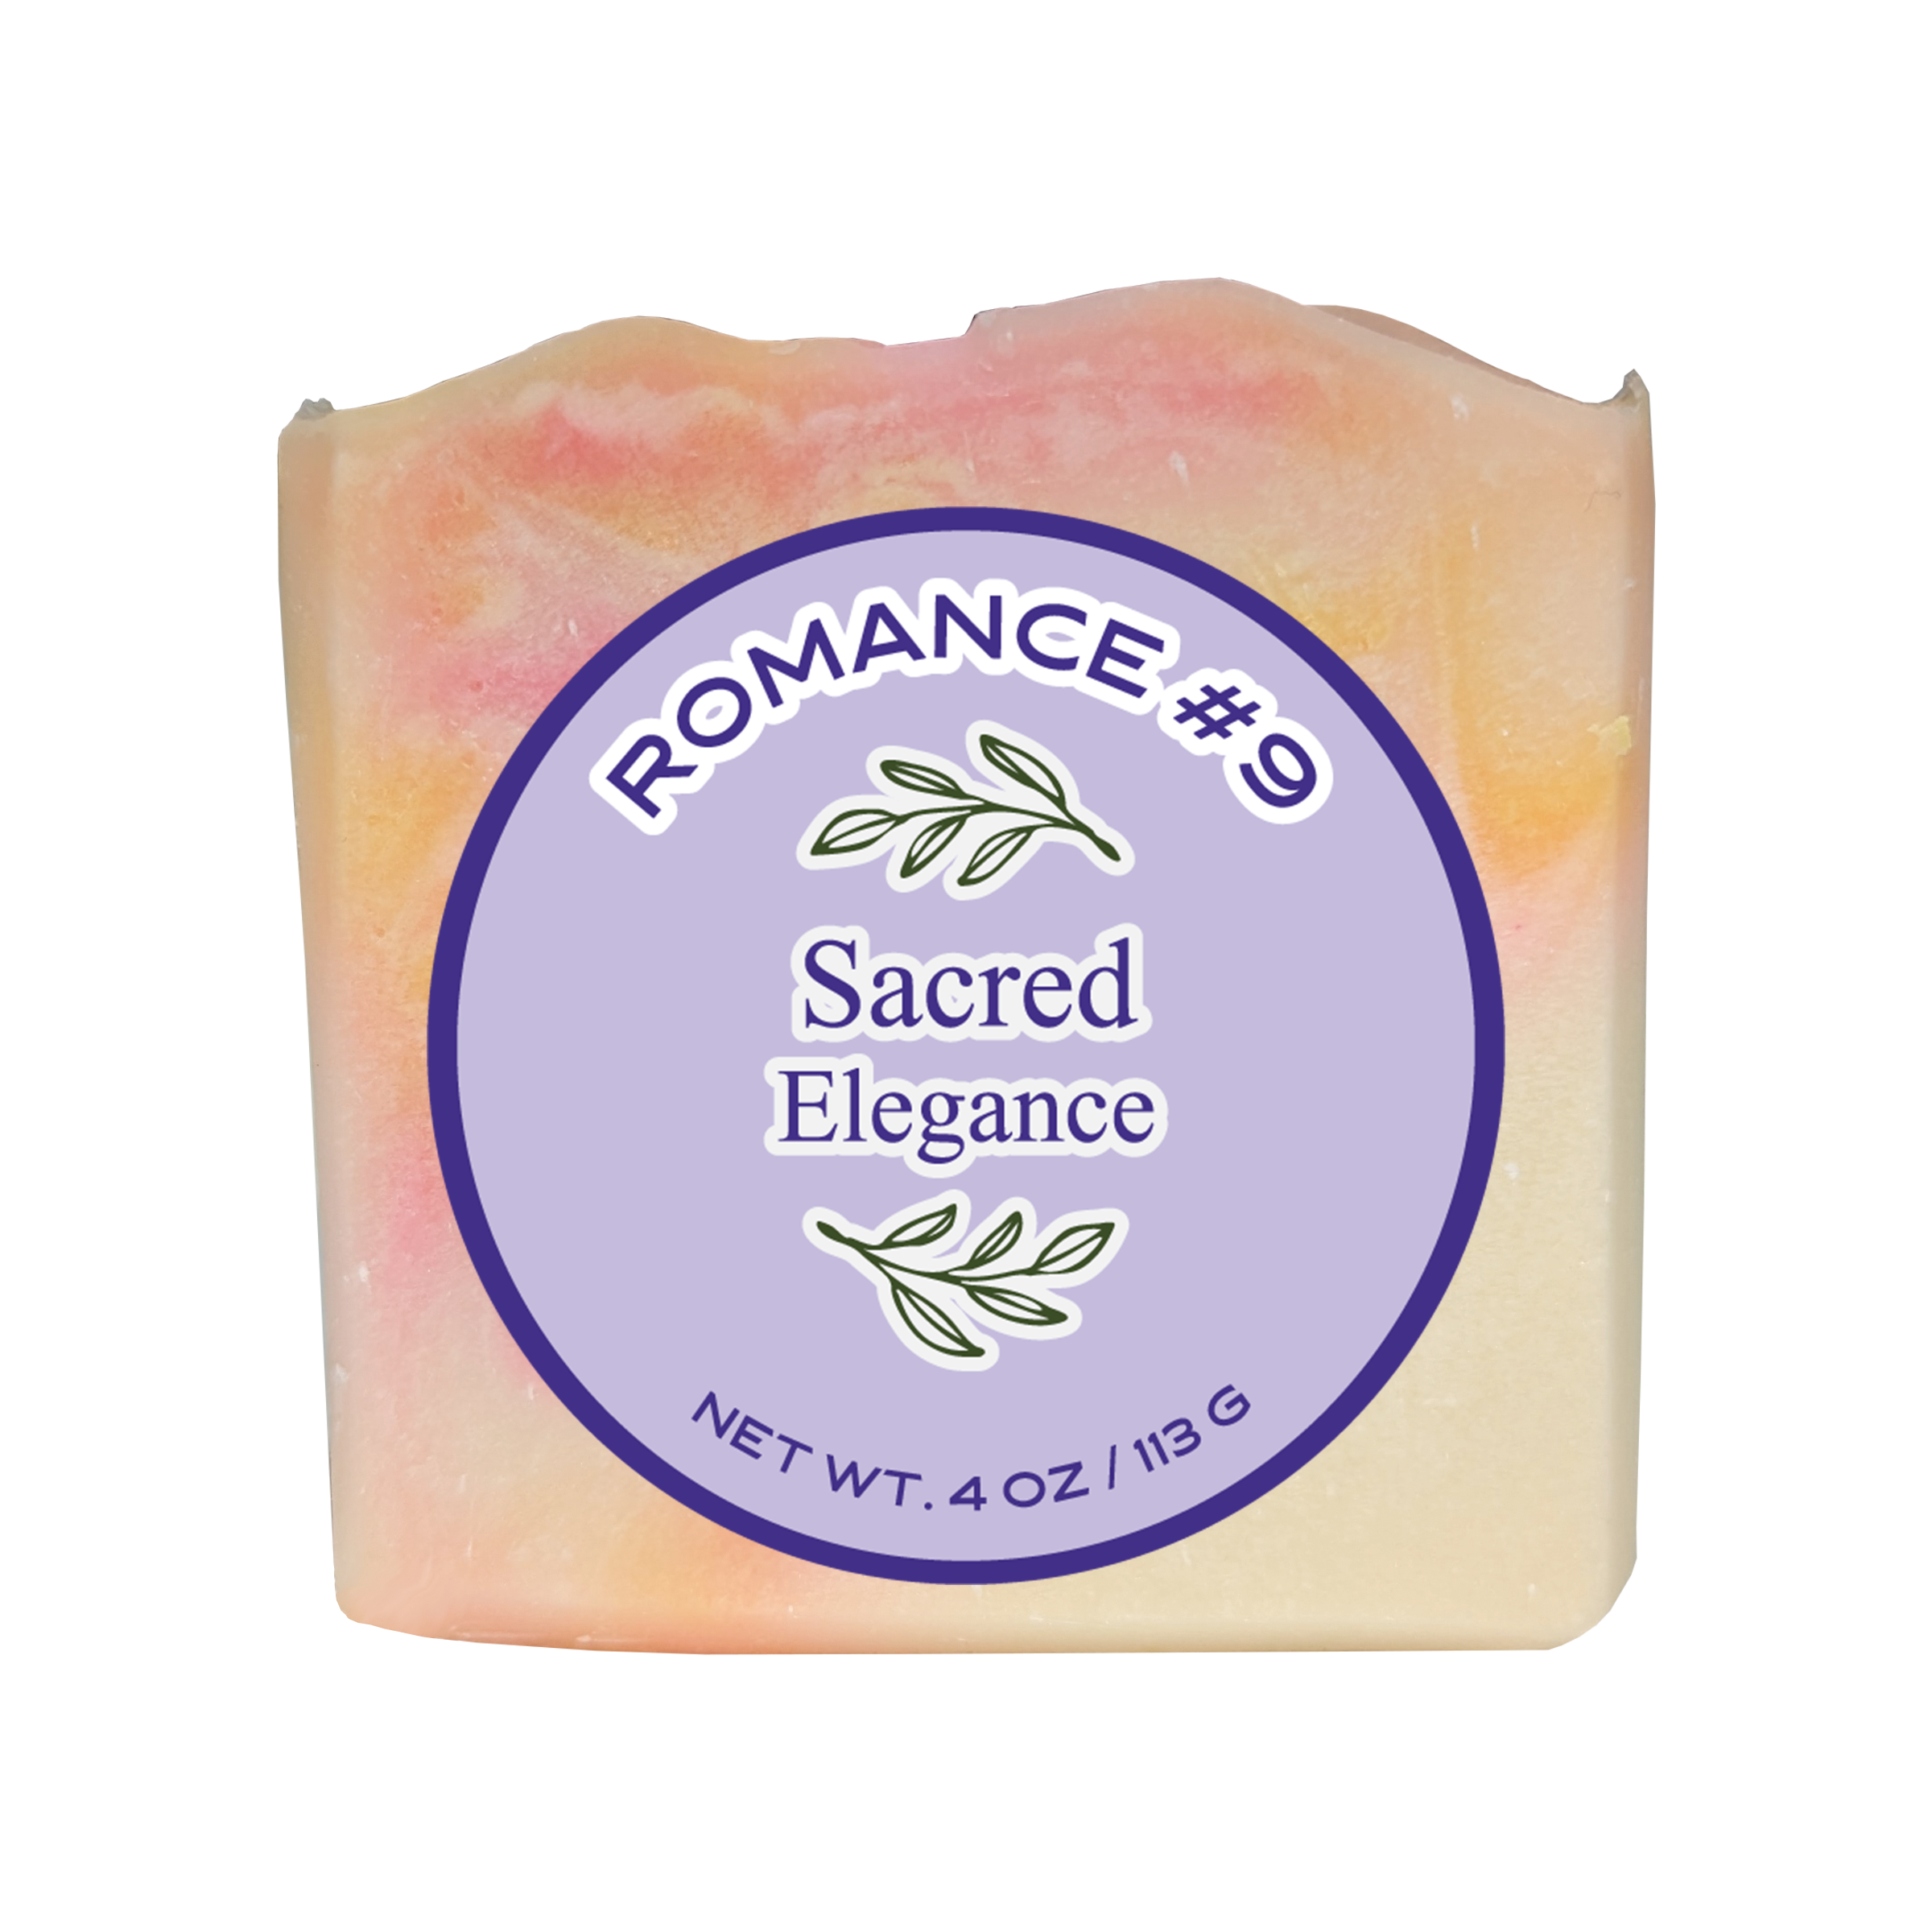 Romance #9 Soap